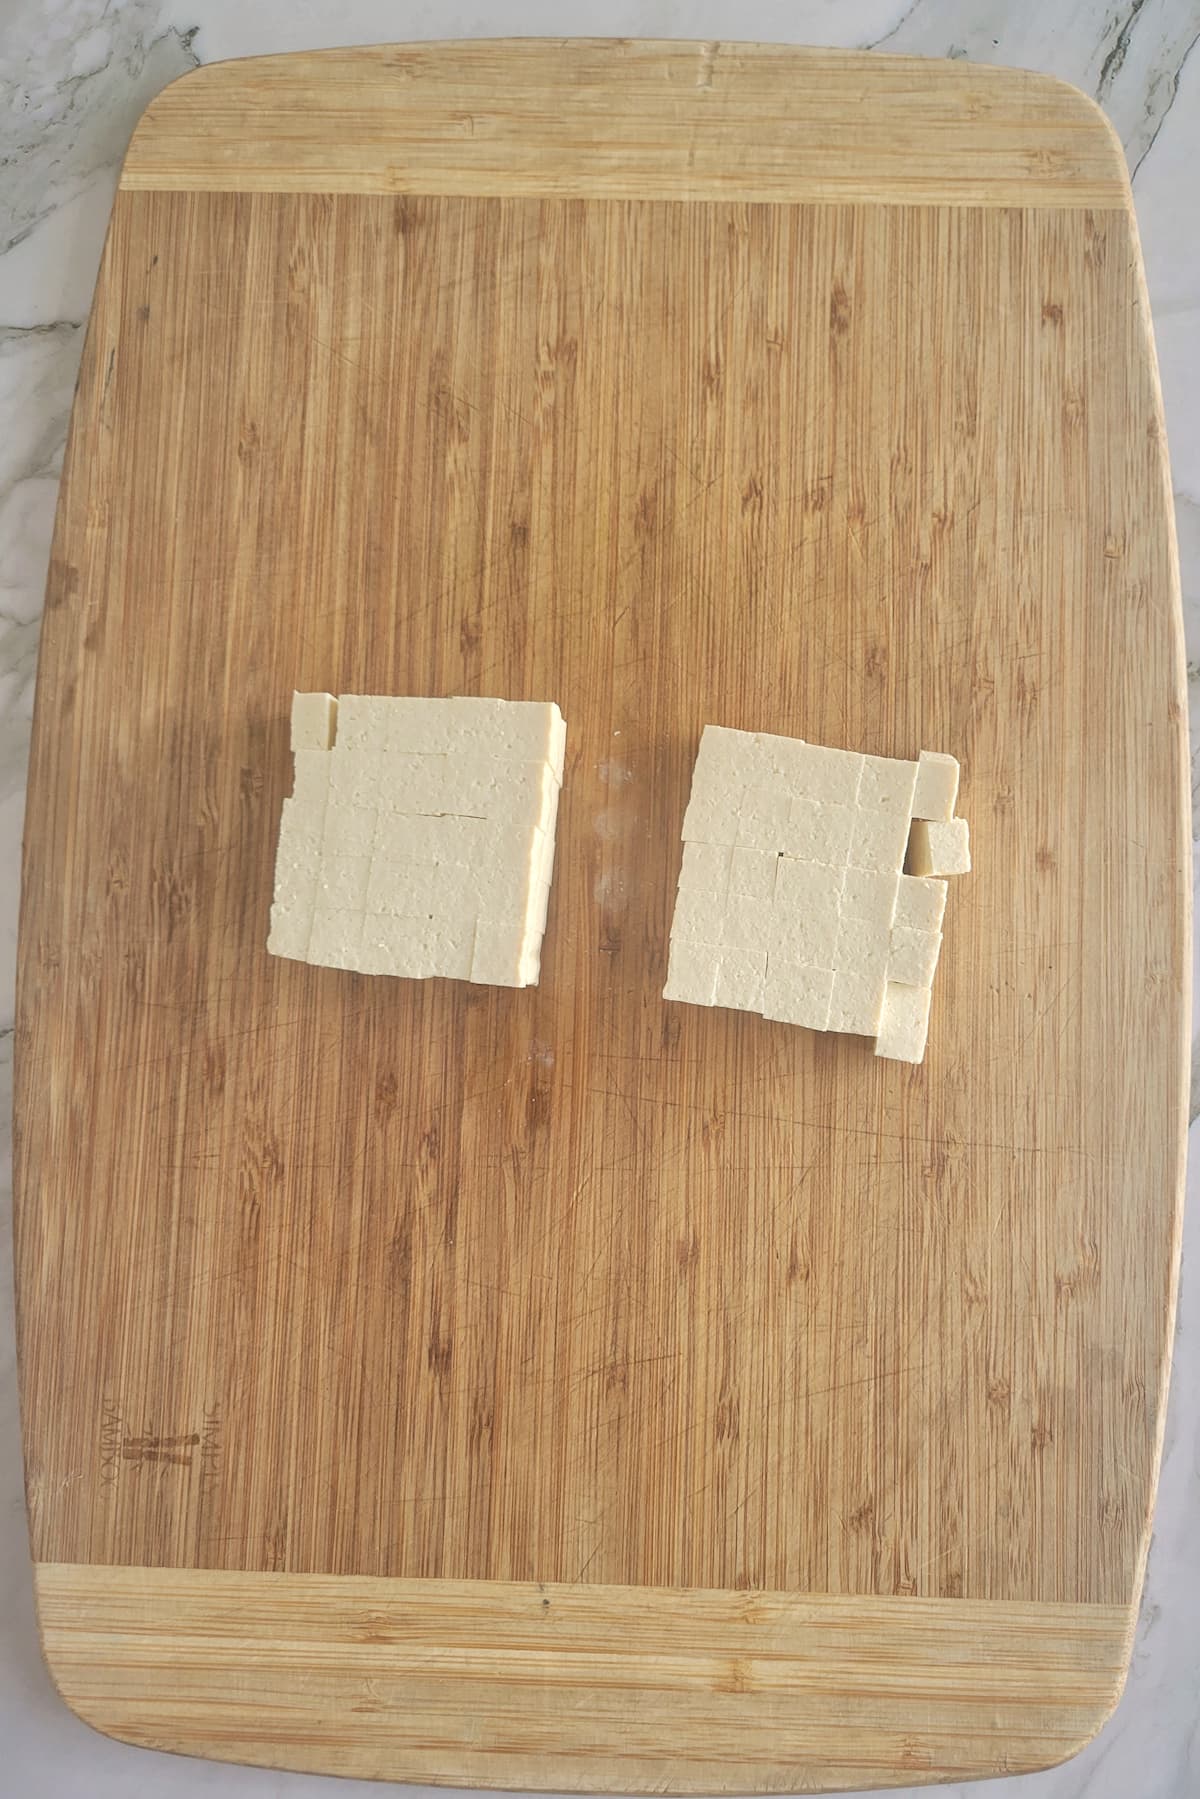 cubed blocks of tofu on a cutting board